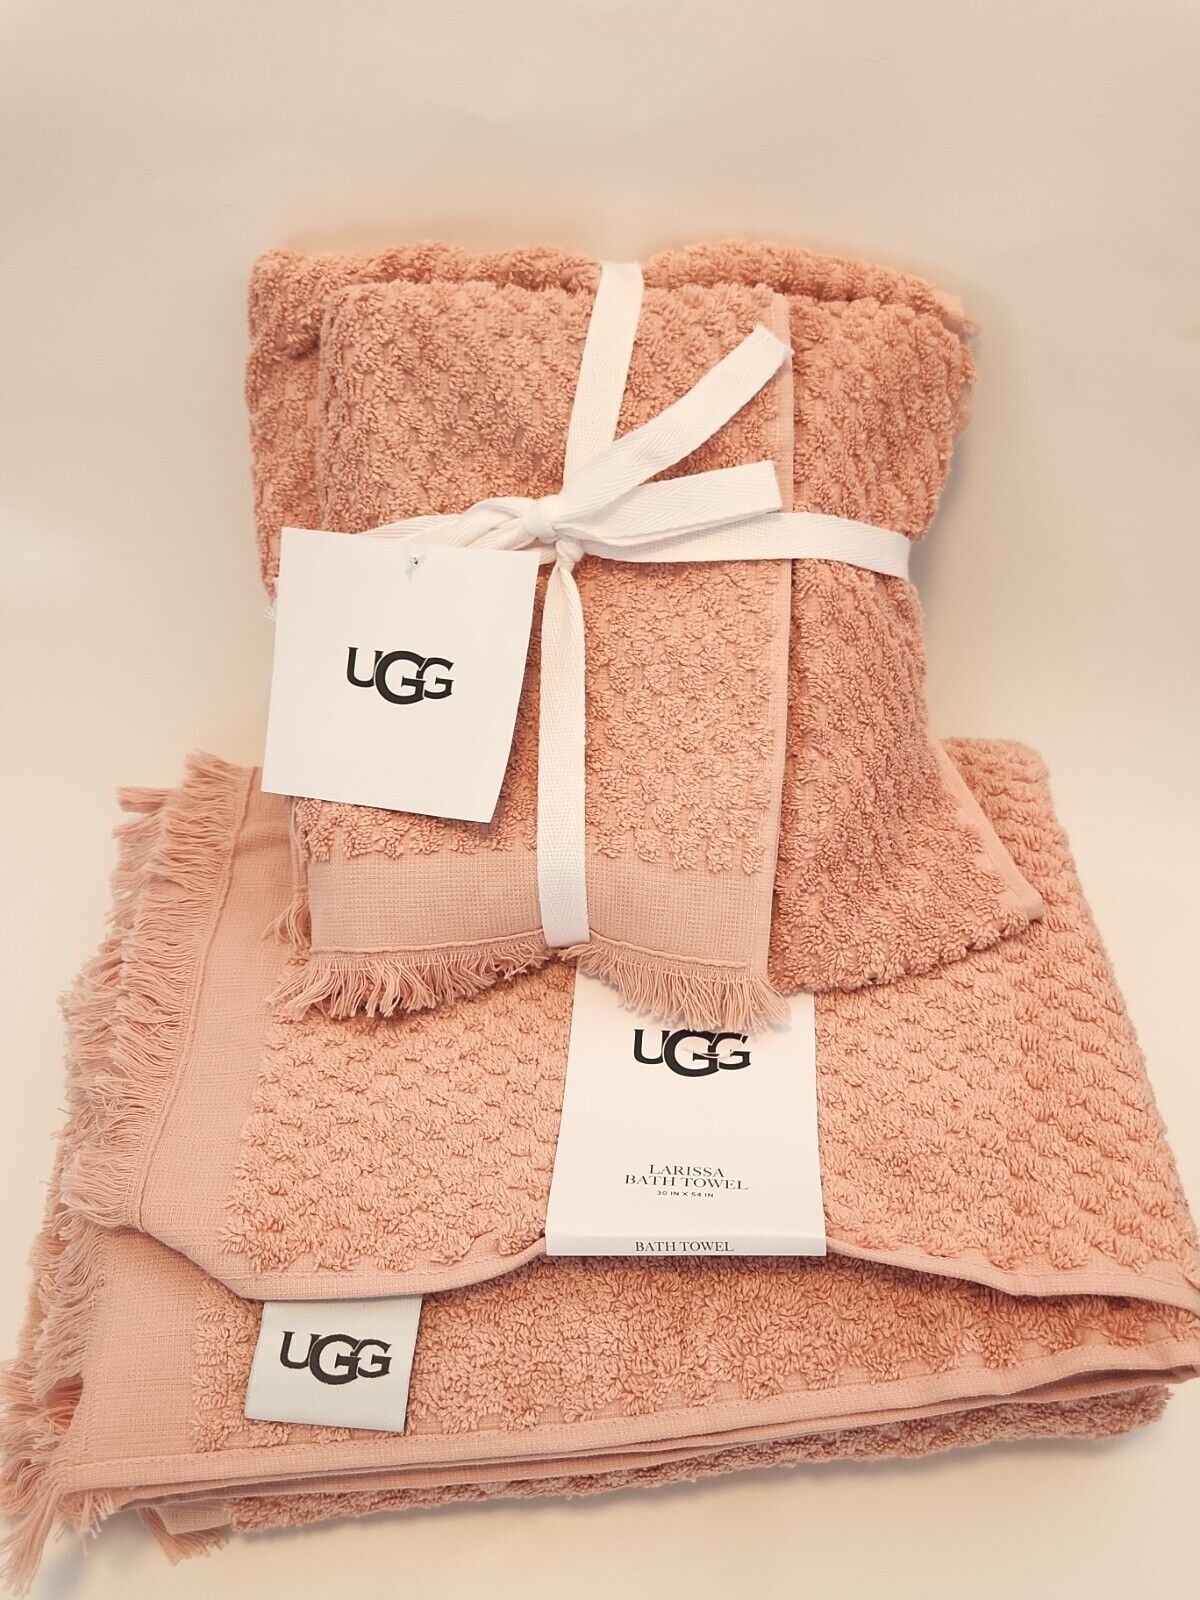 UGG LARISSA Set of 3: Two Hand Towels & One Bath Towel, Rose, 30x54, 16x28  NWT